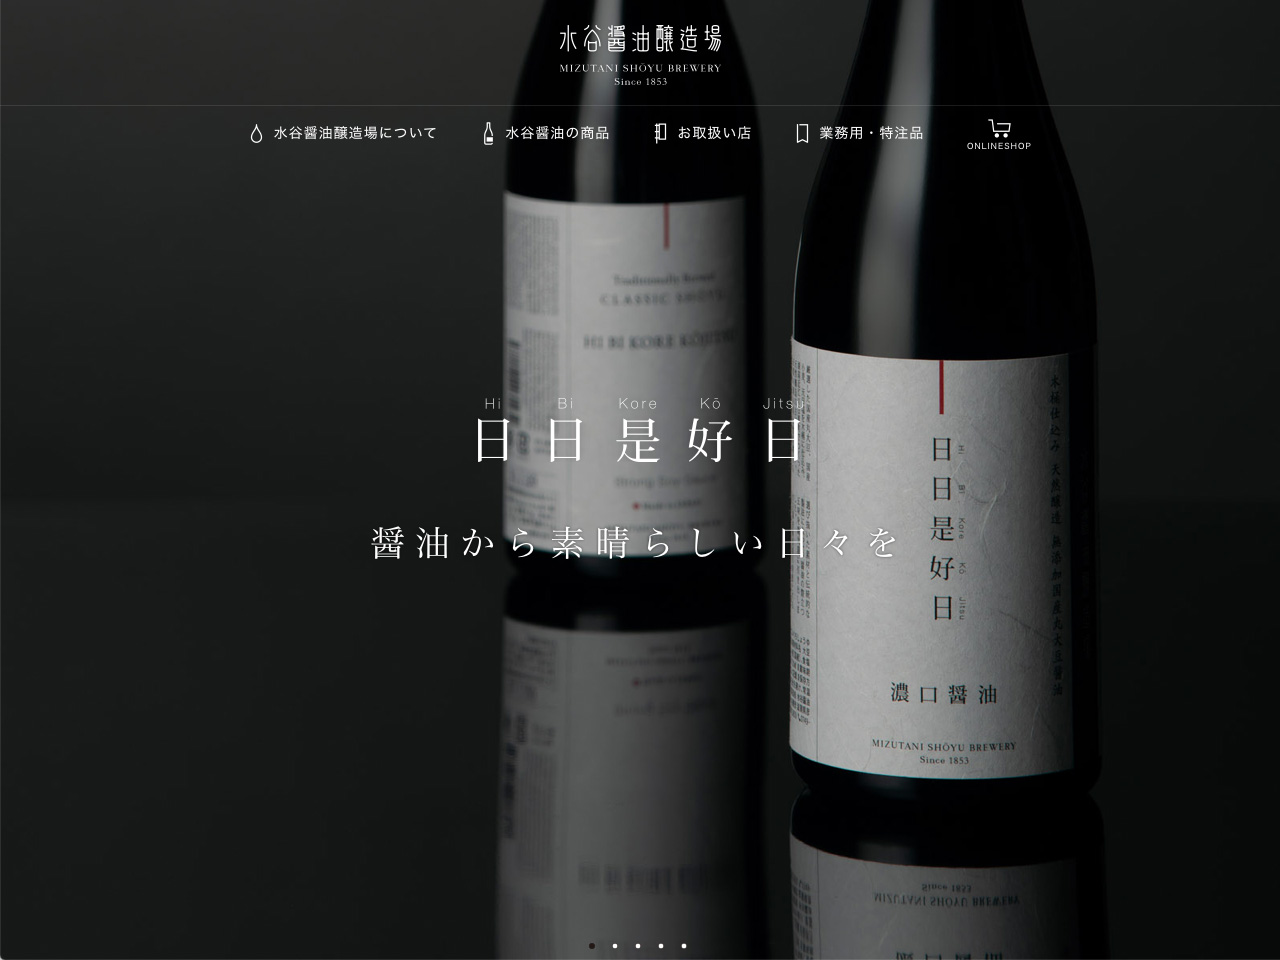 Released Mizutani Shōyu Brewery's website.